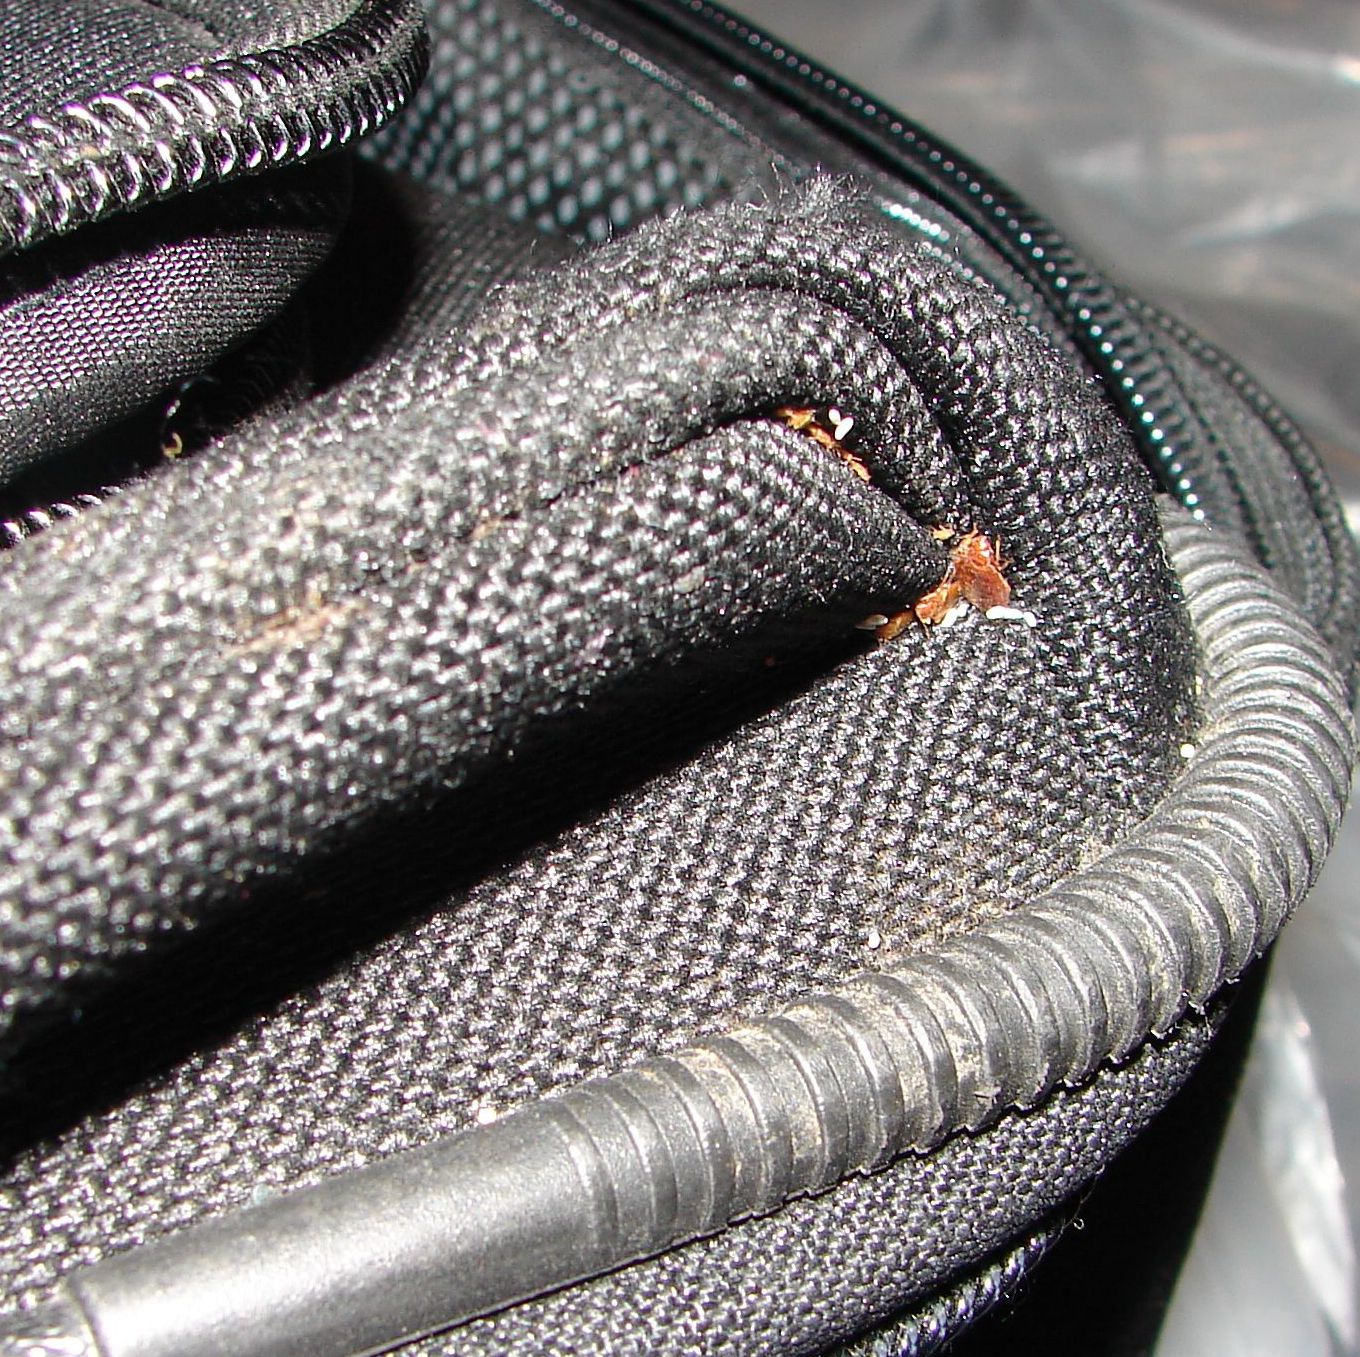 Bedbugs on a black bag.